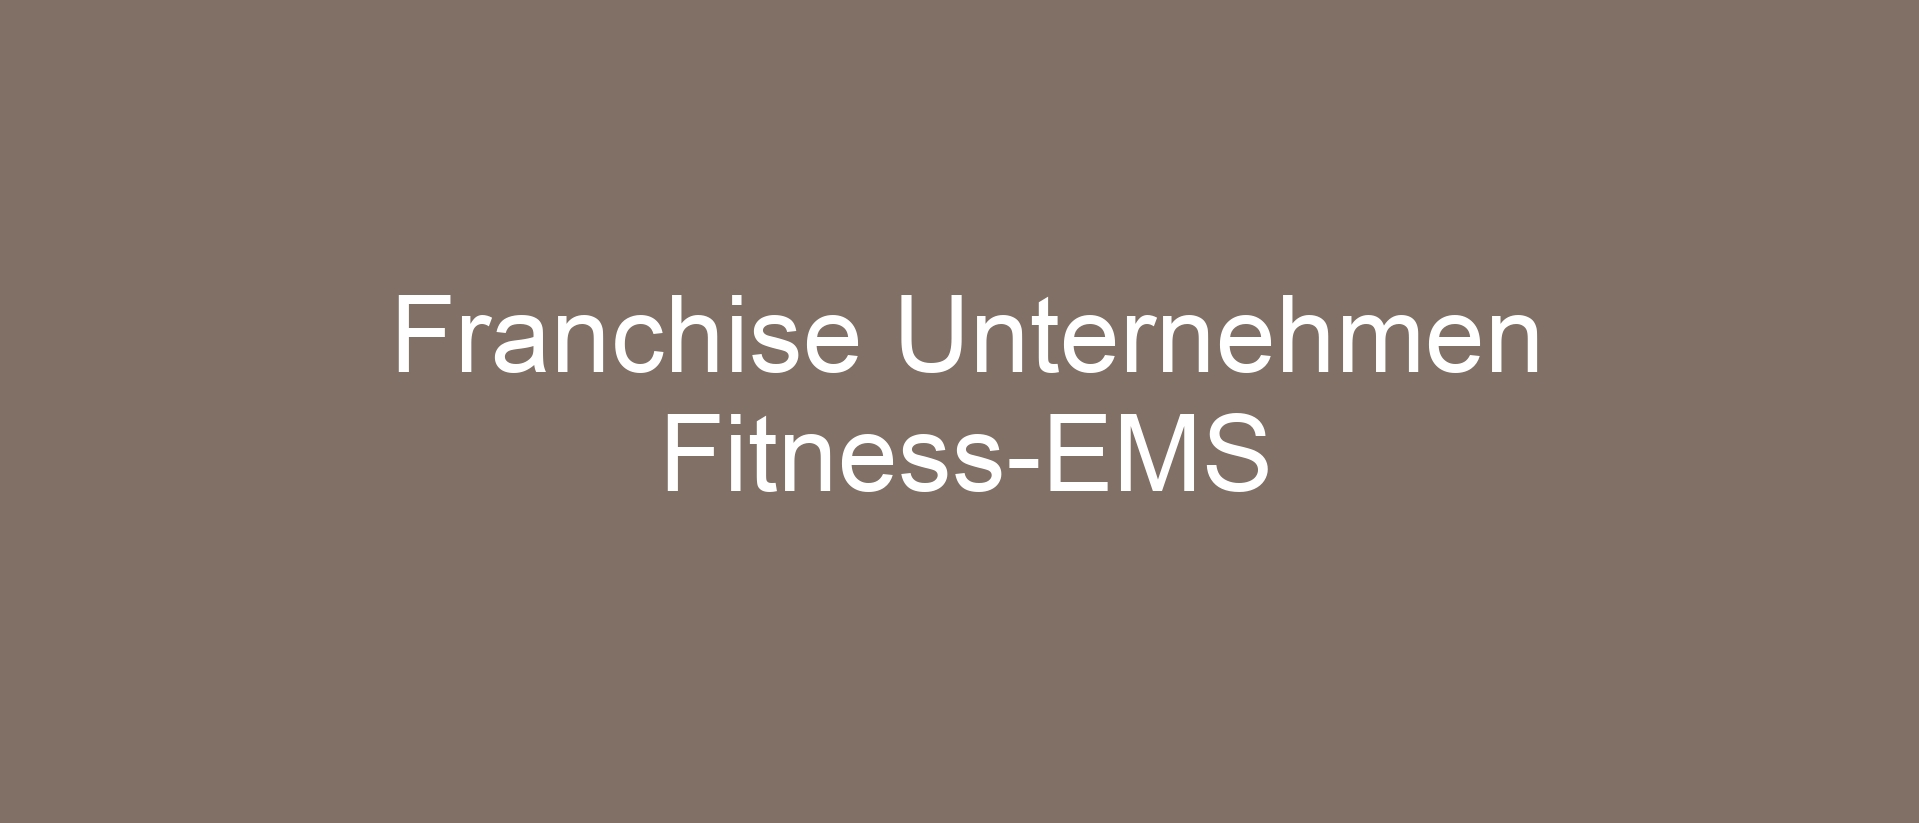 Franchise Unternehmen Fitness-EMS